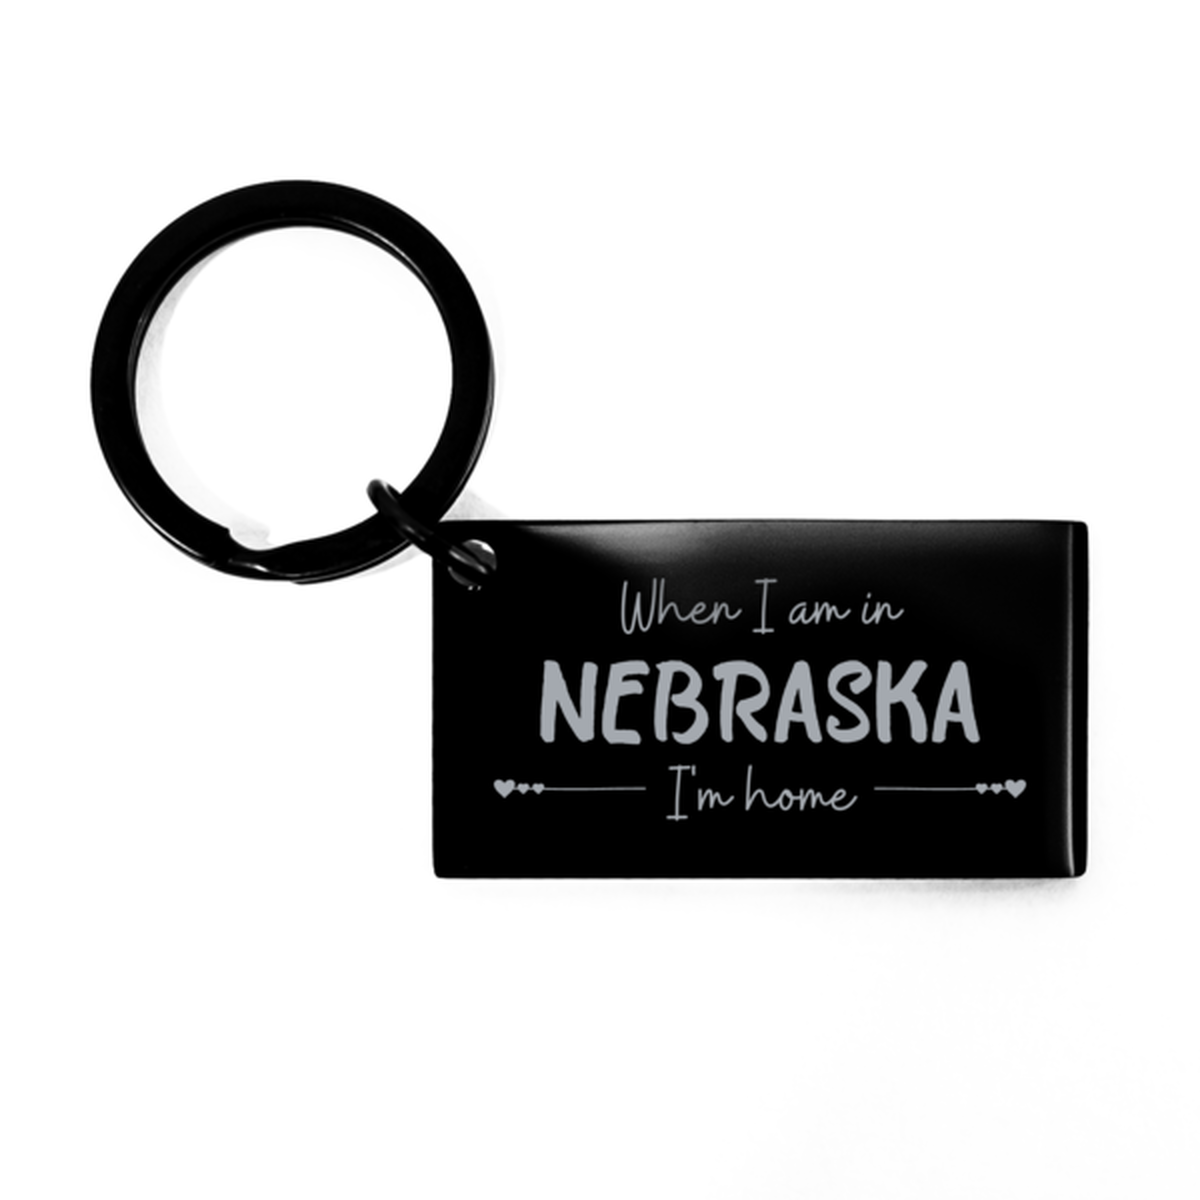 When I am in Nebraska I'm home Keychain, Cheap Gifts For Nebraska, State Nebraska Birthday Gifts for Friends Coworker